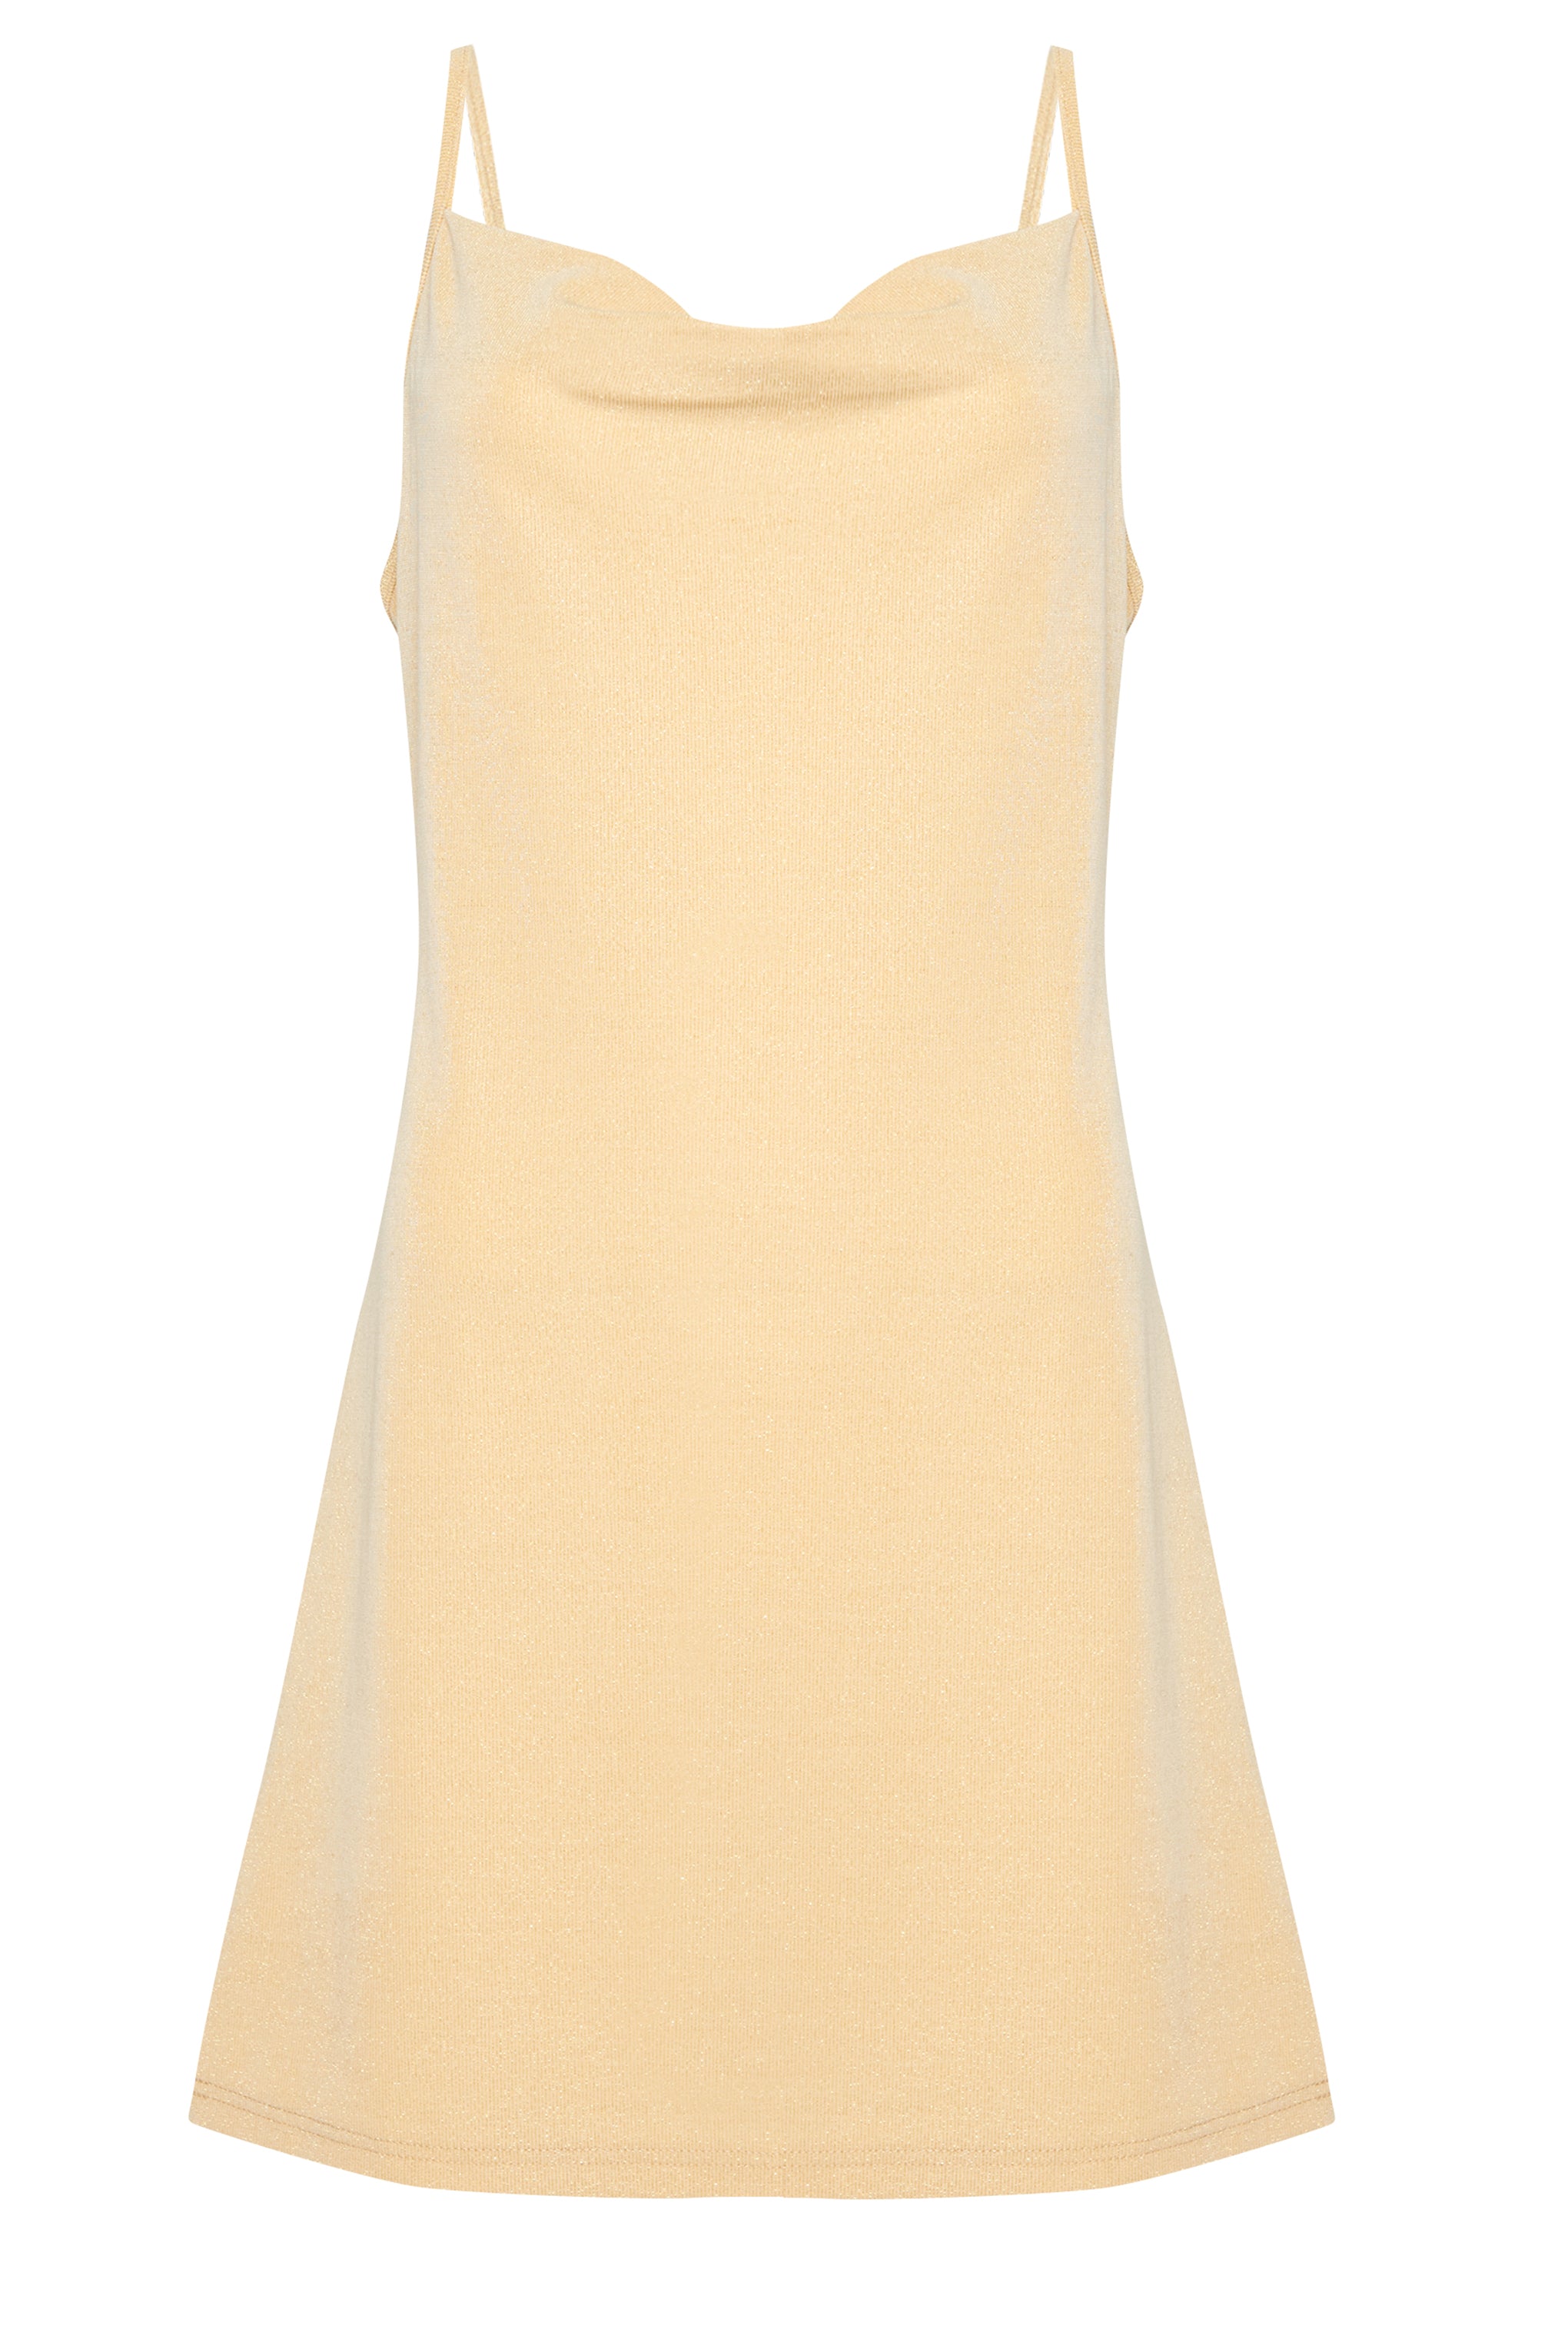 Glamorous Gold Cami Cowl Neck Mini Dress